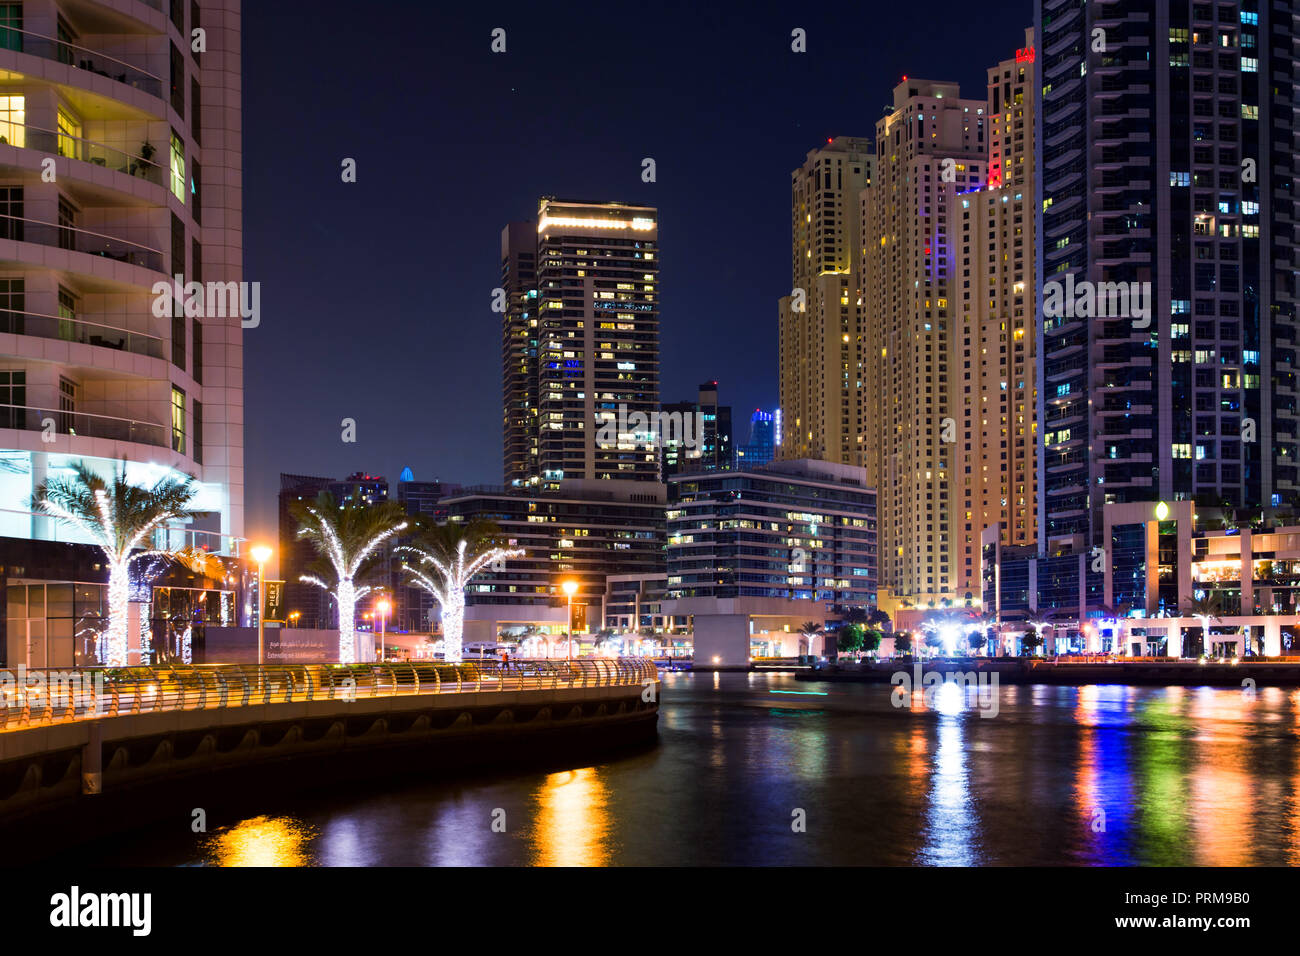 Dubai marina night scene in the United Arab Emirates Stock Photo